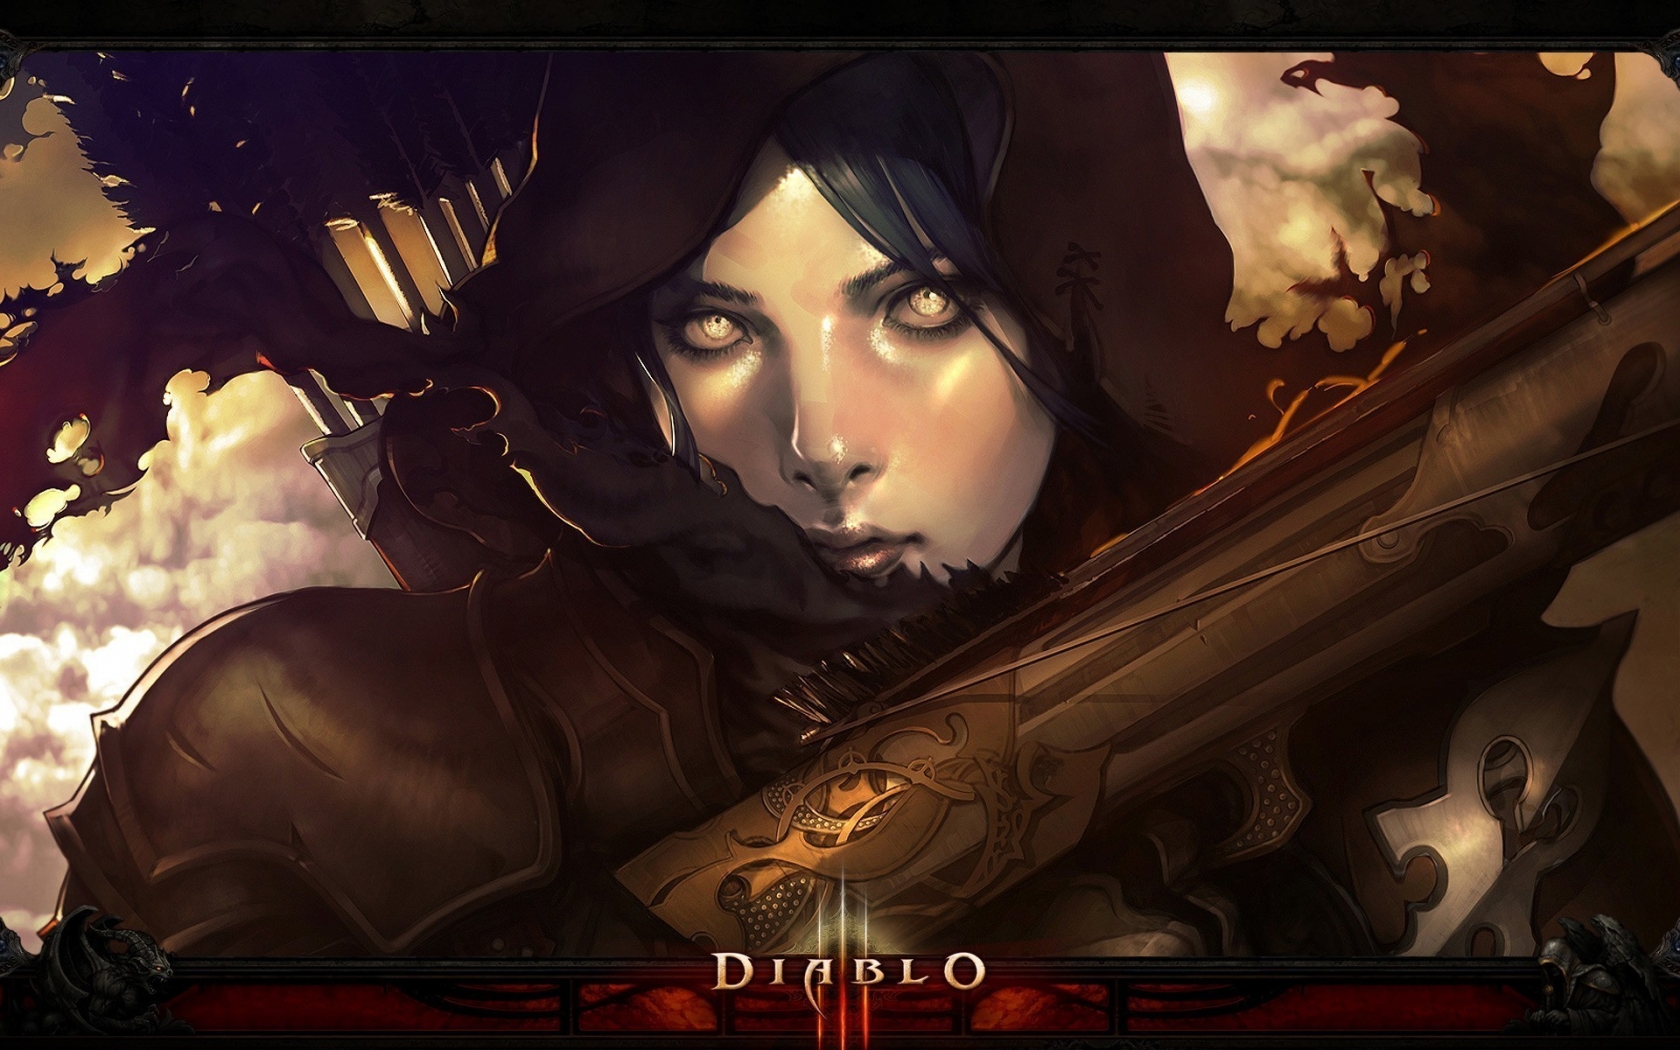 Diablo III Character for 1680 x 1050 widescreen resolution